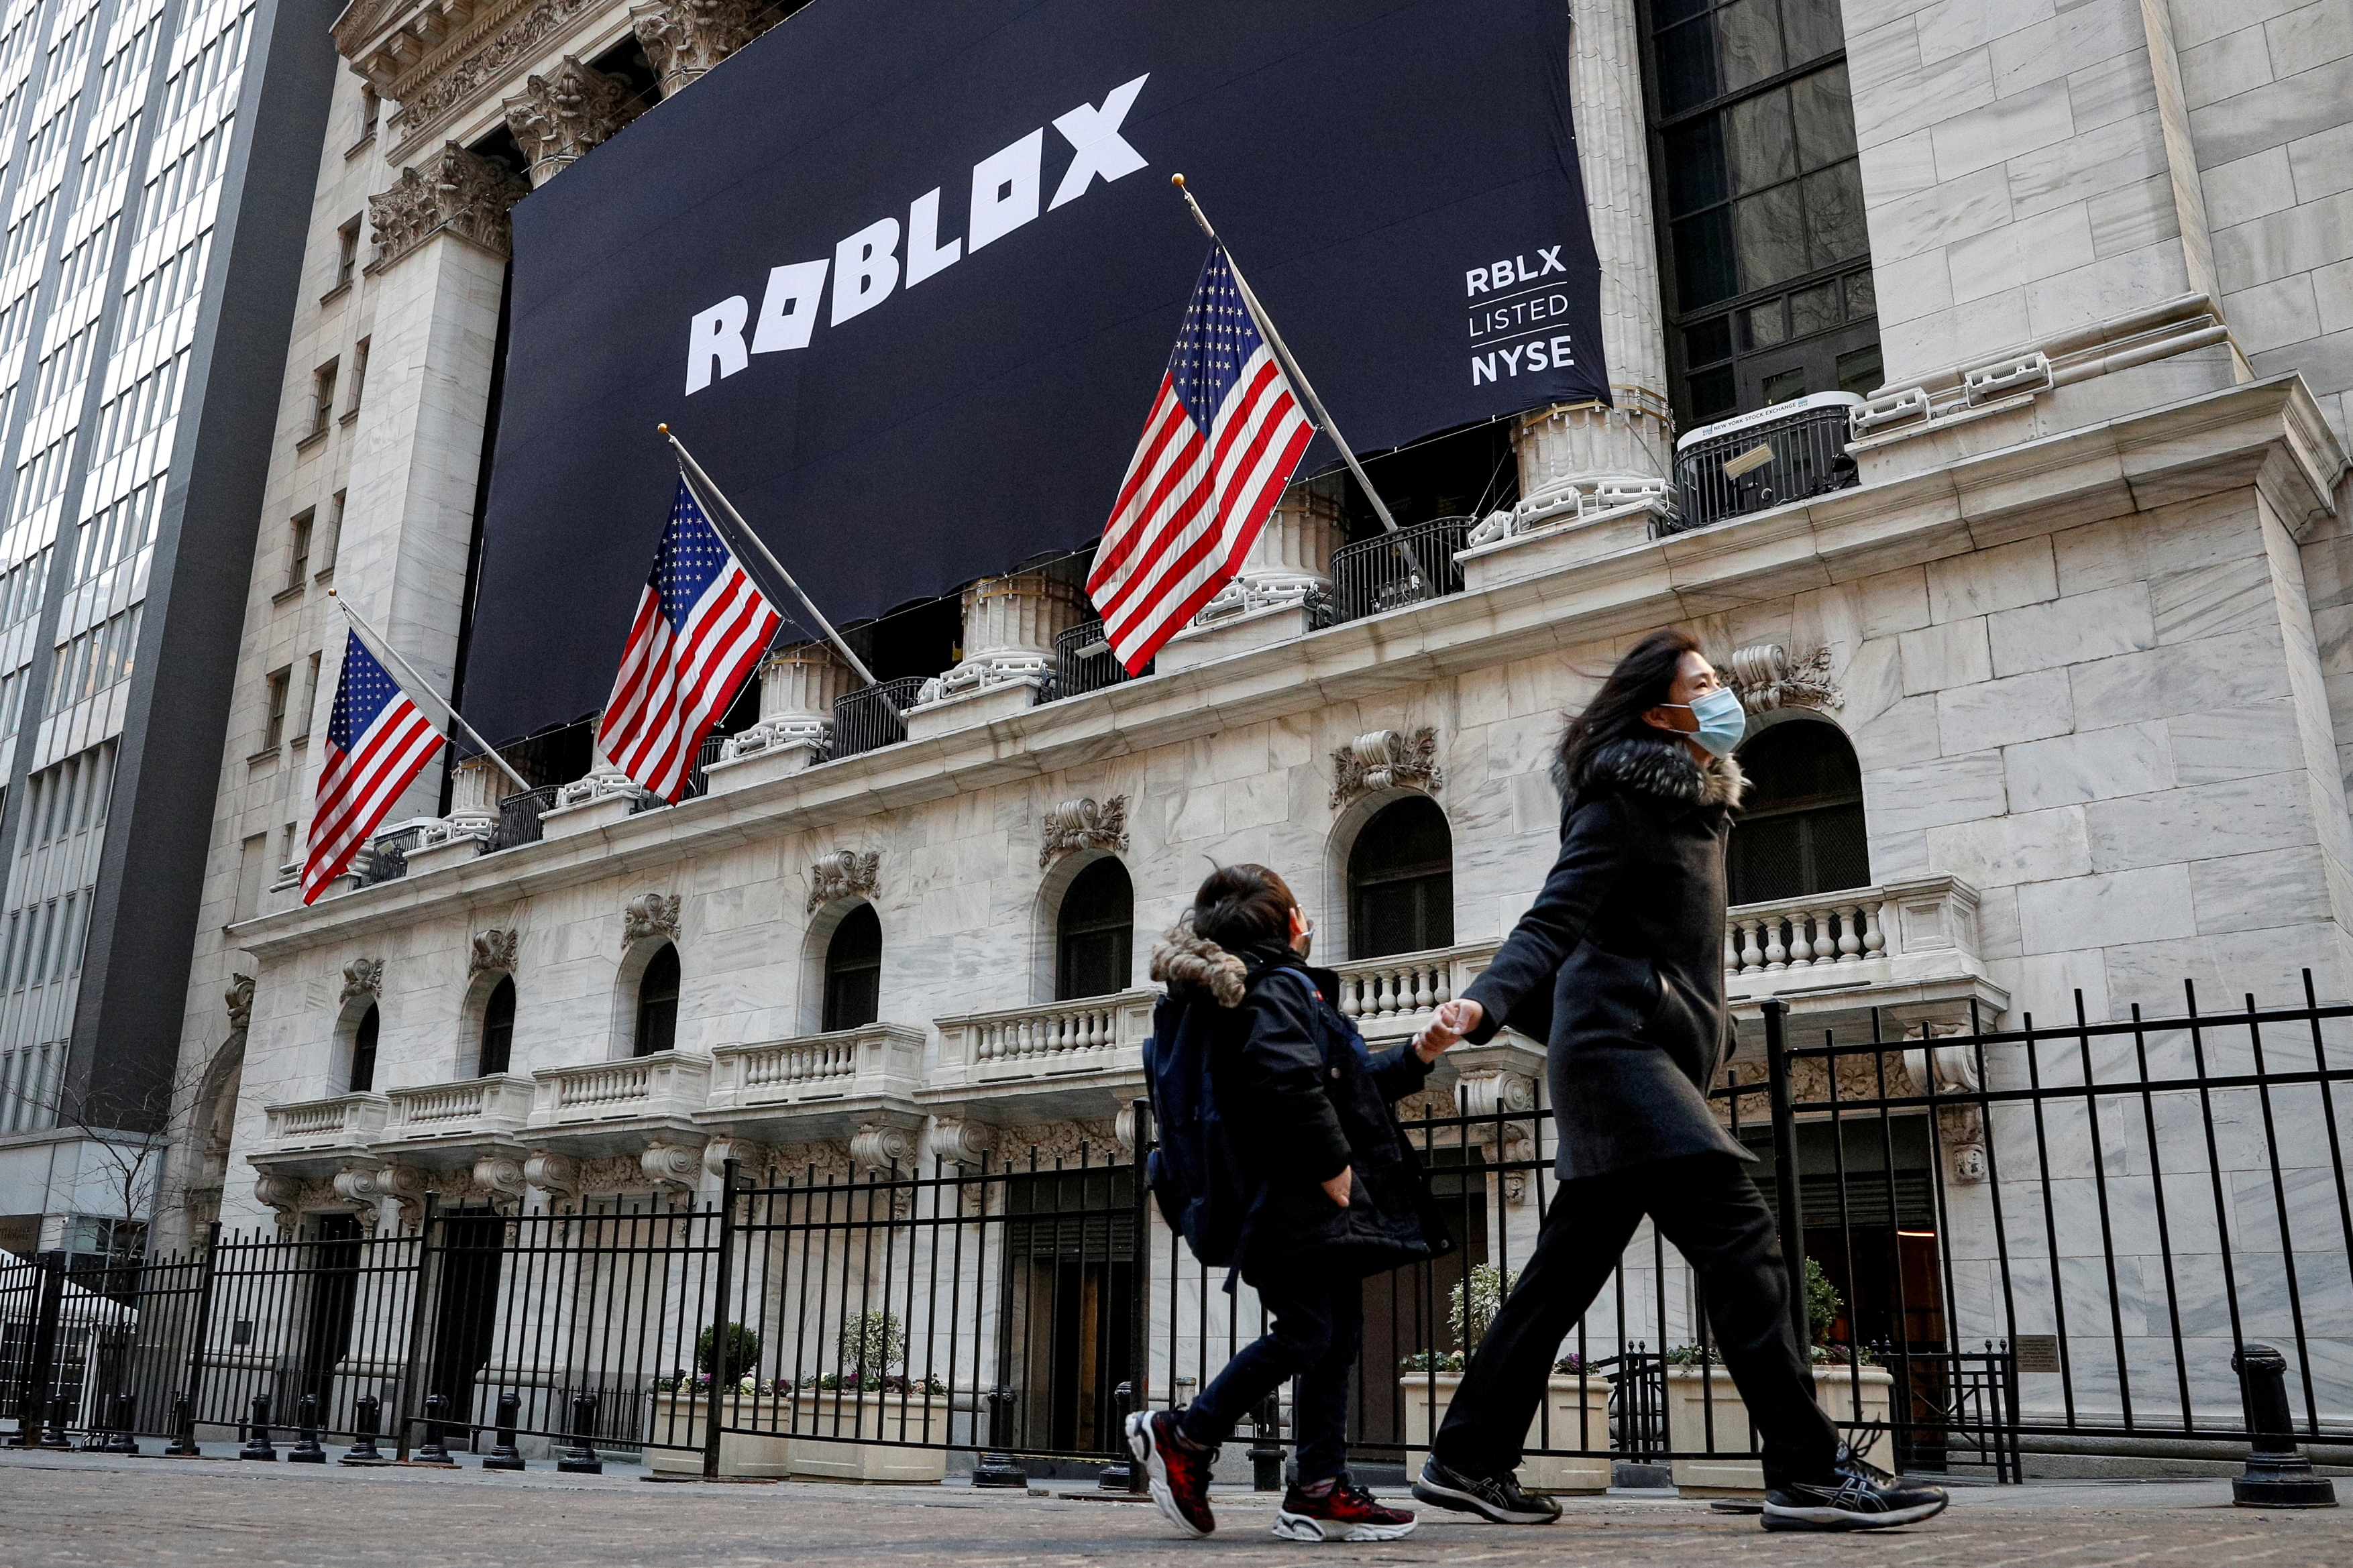 Roblox shares soar as earnings defy gaming slowdown fears